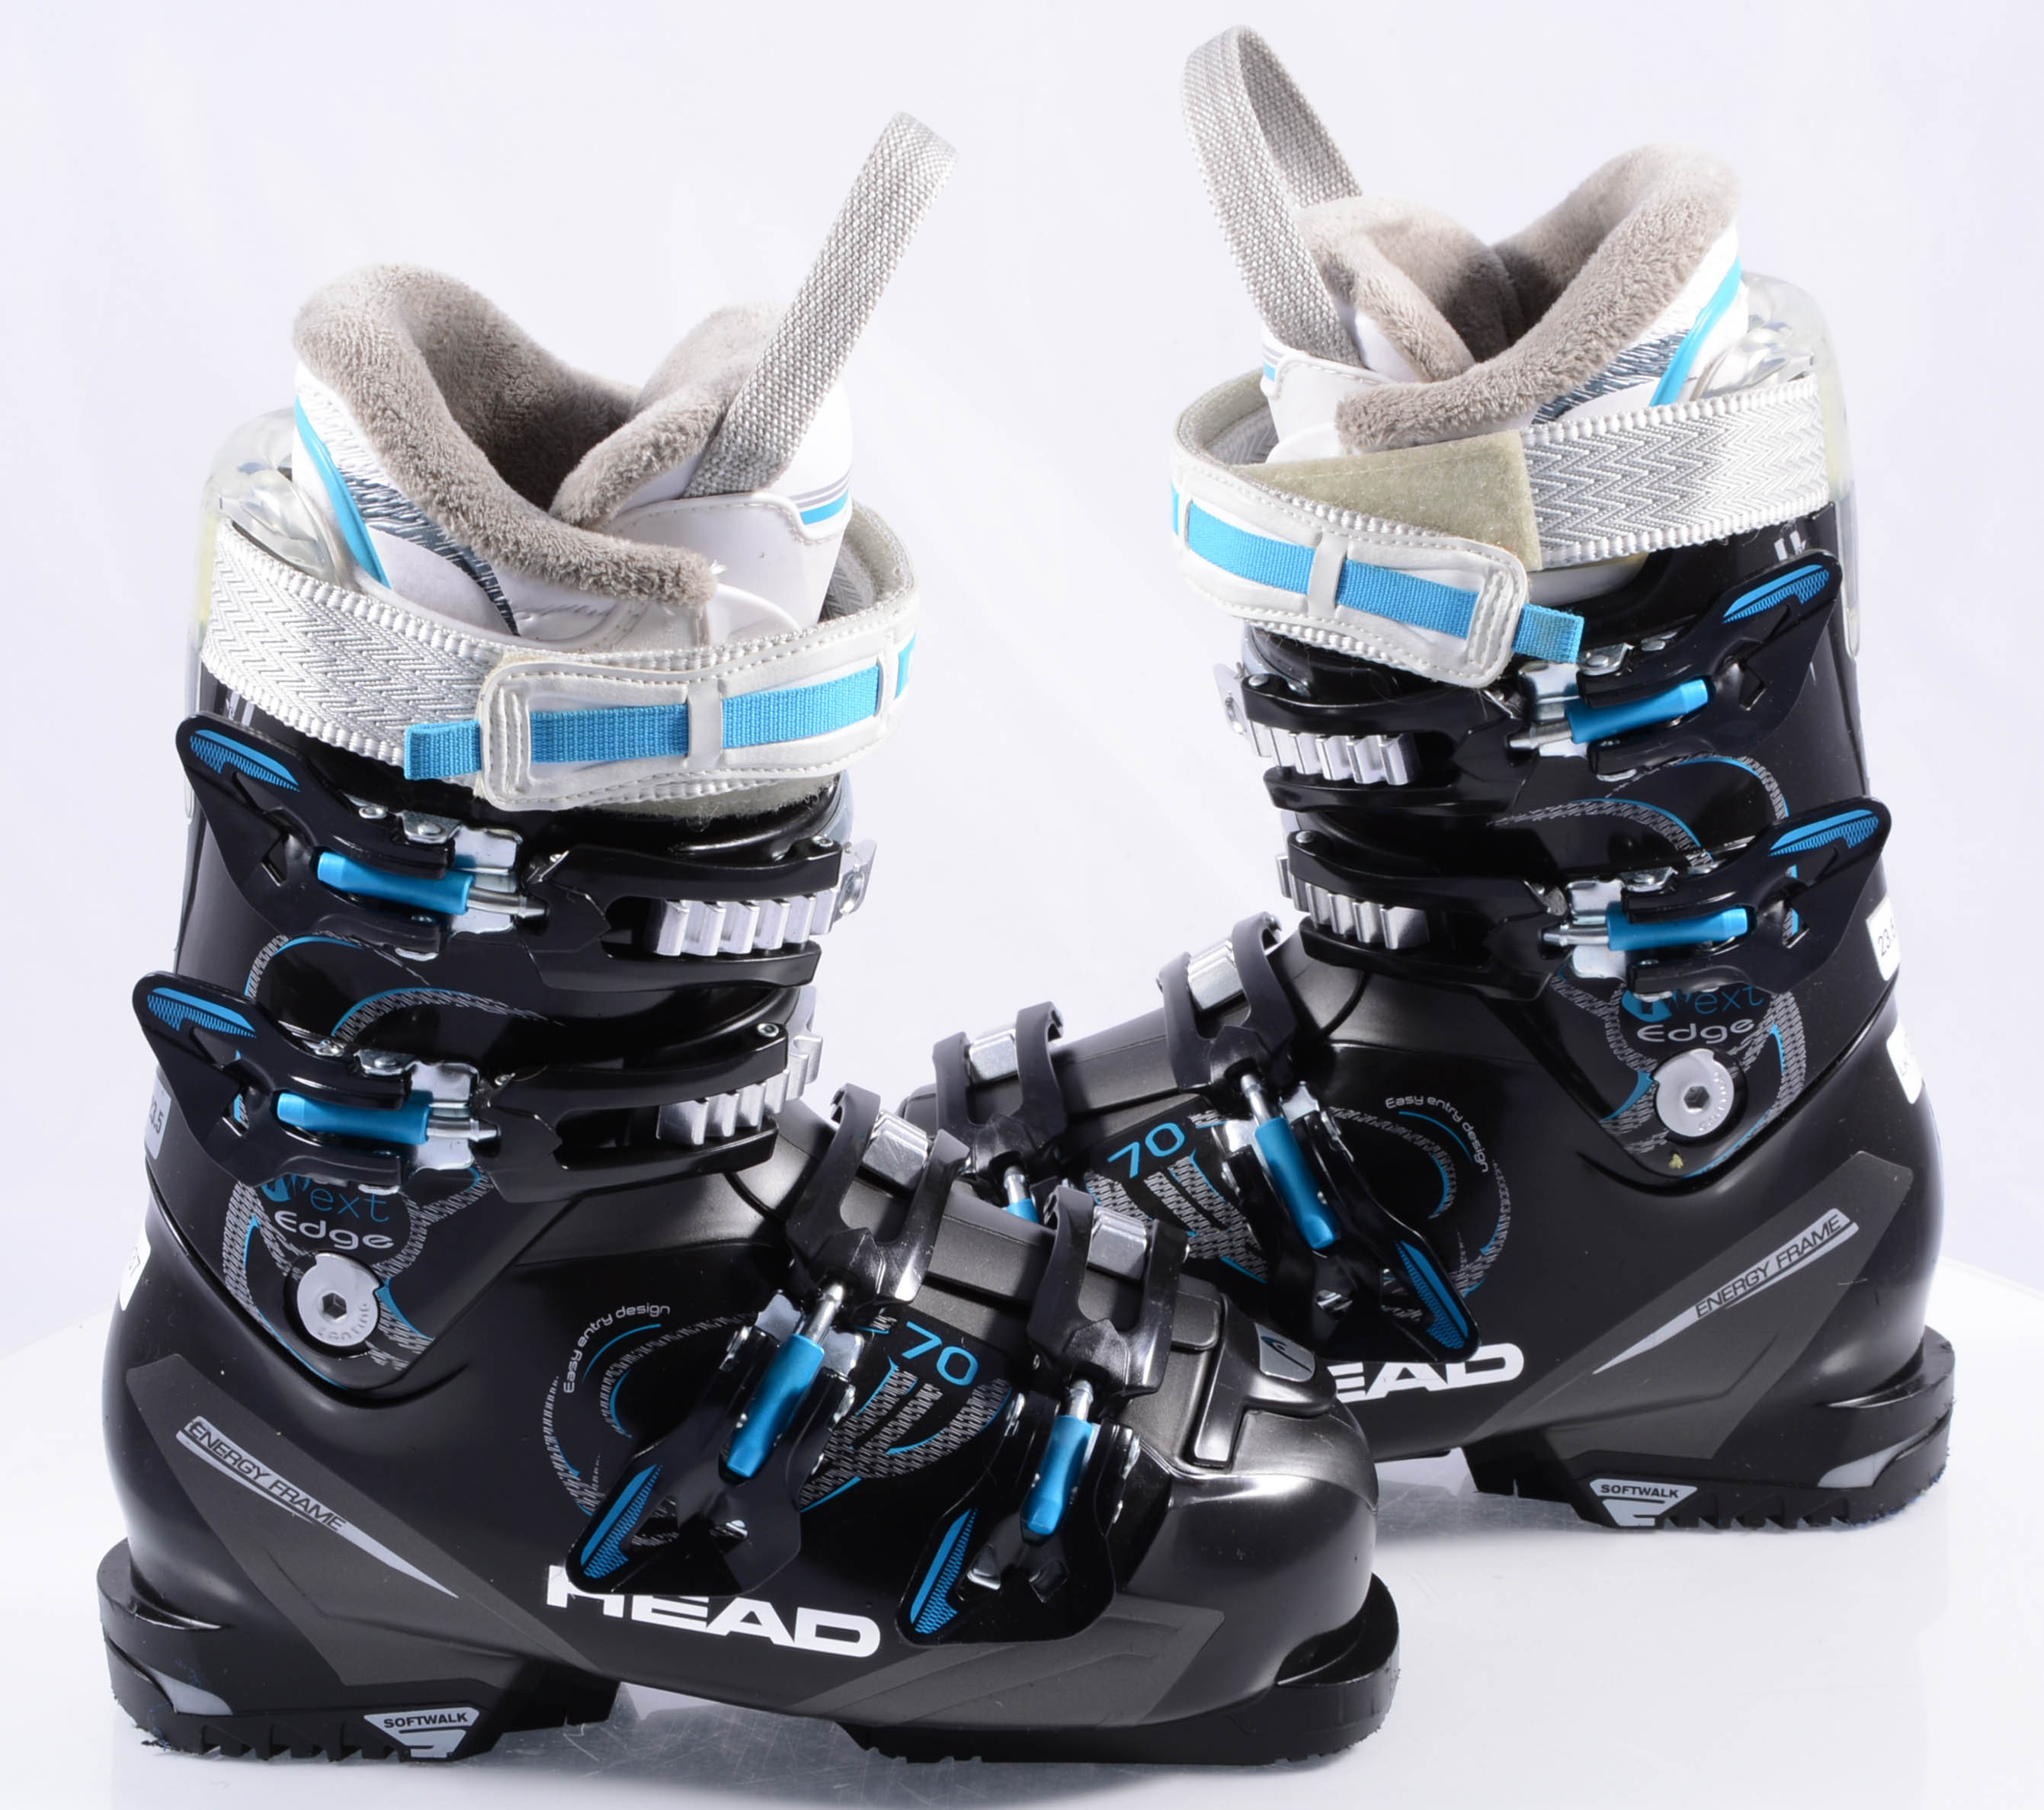 women's ski boots HEAD NEXT EDGE 70, energy frame, soft walk